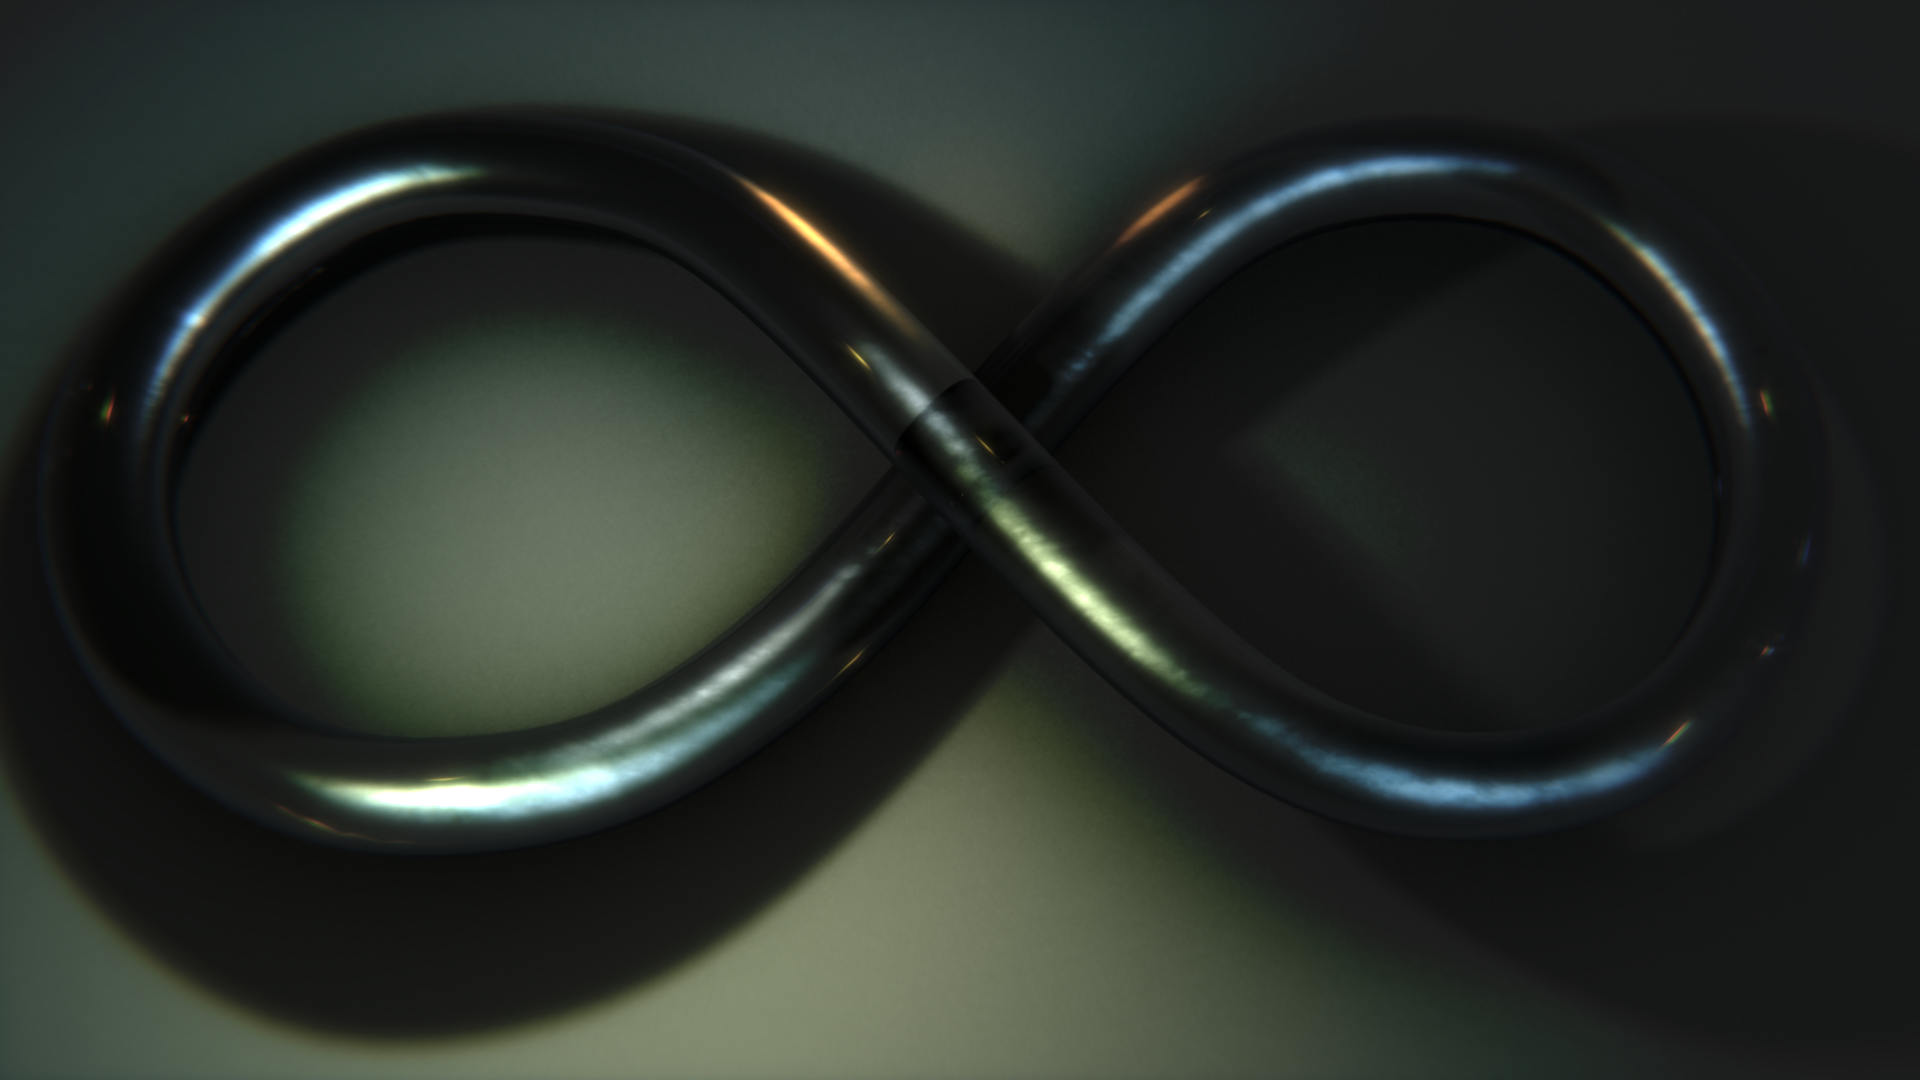 infinity symbol by JoaoYates on DeviantArt